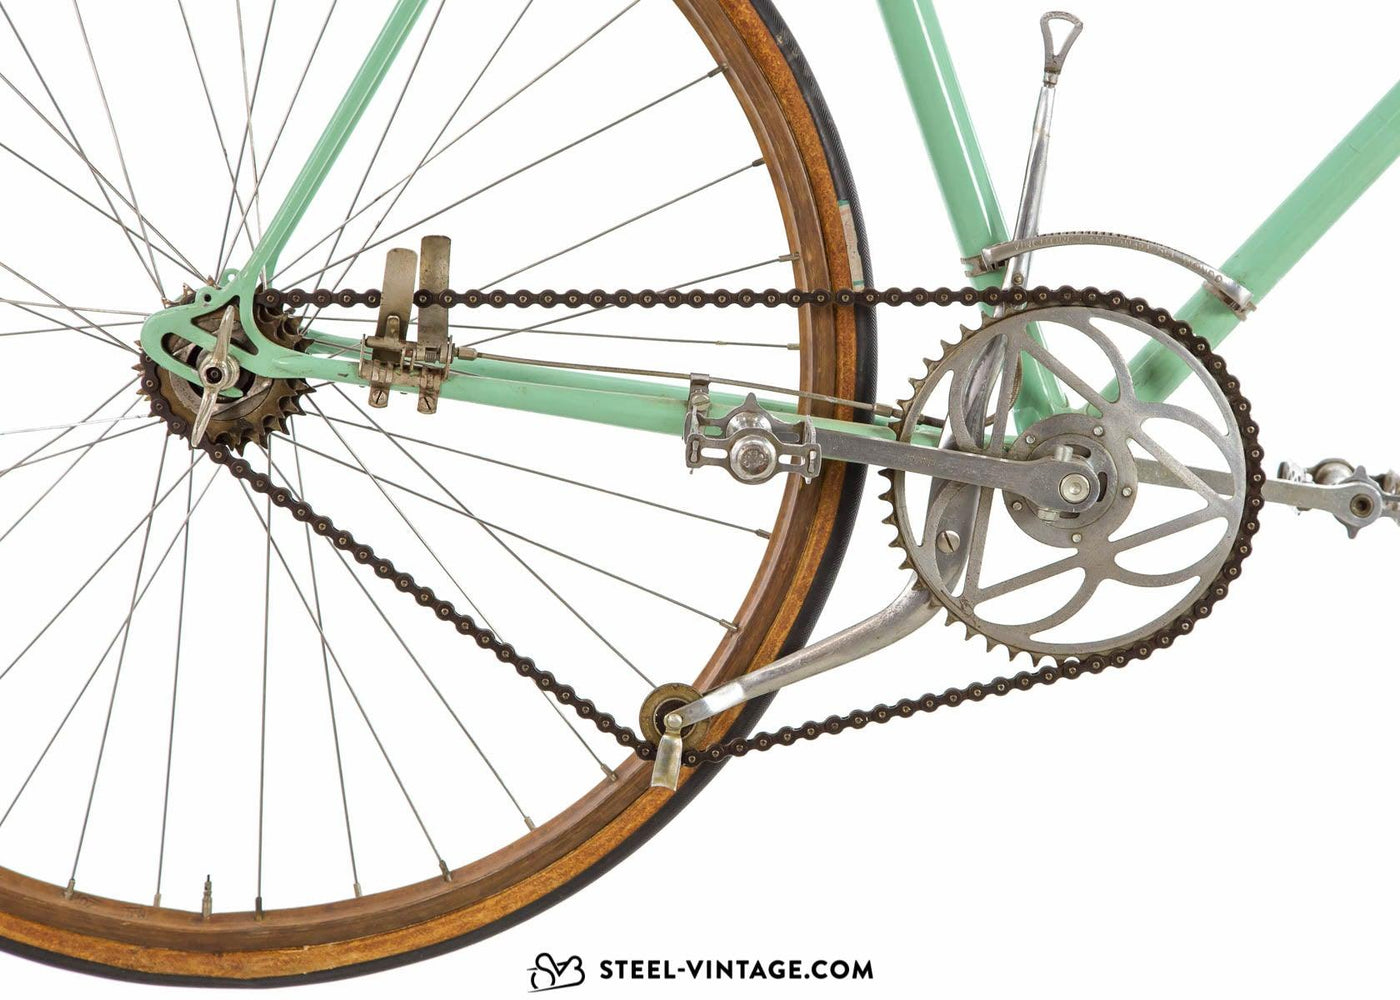 Bianchi Branded Vittoria Margherita Bicycle 1940s - Steel Vintage Bikes